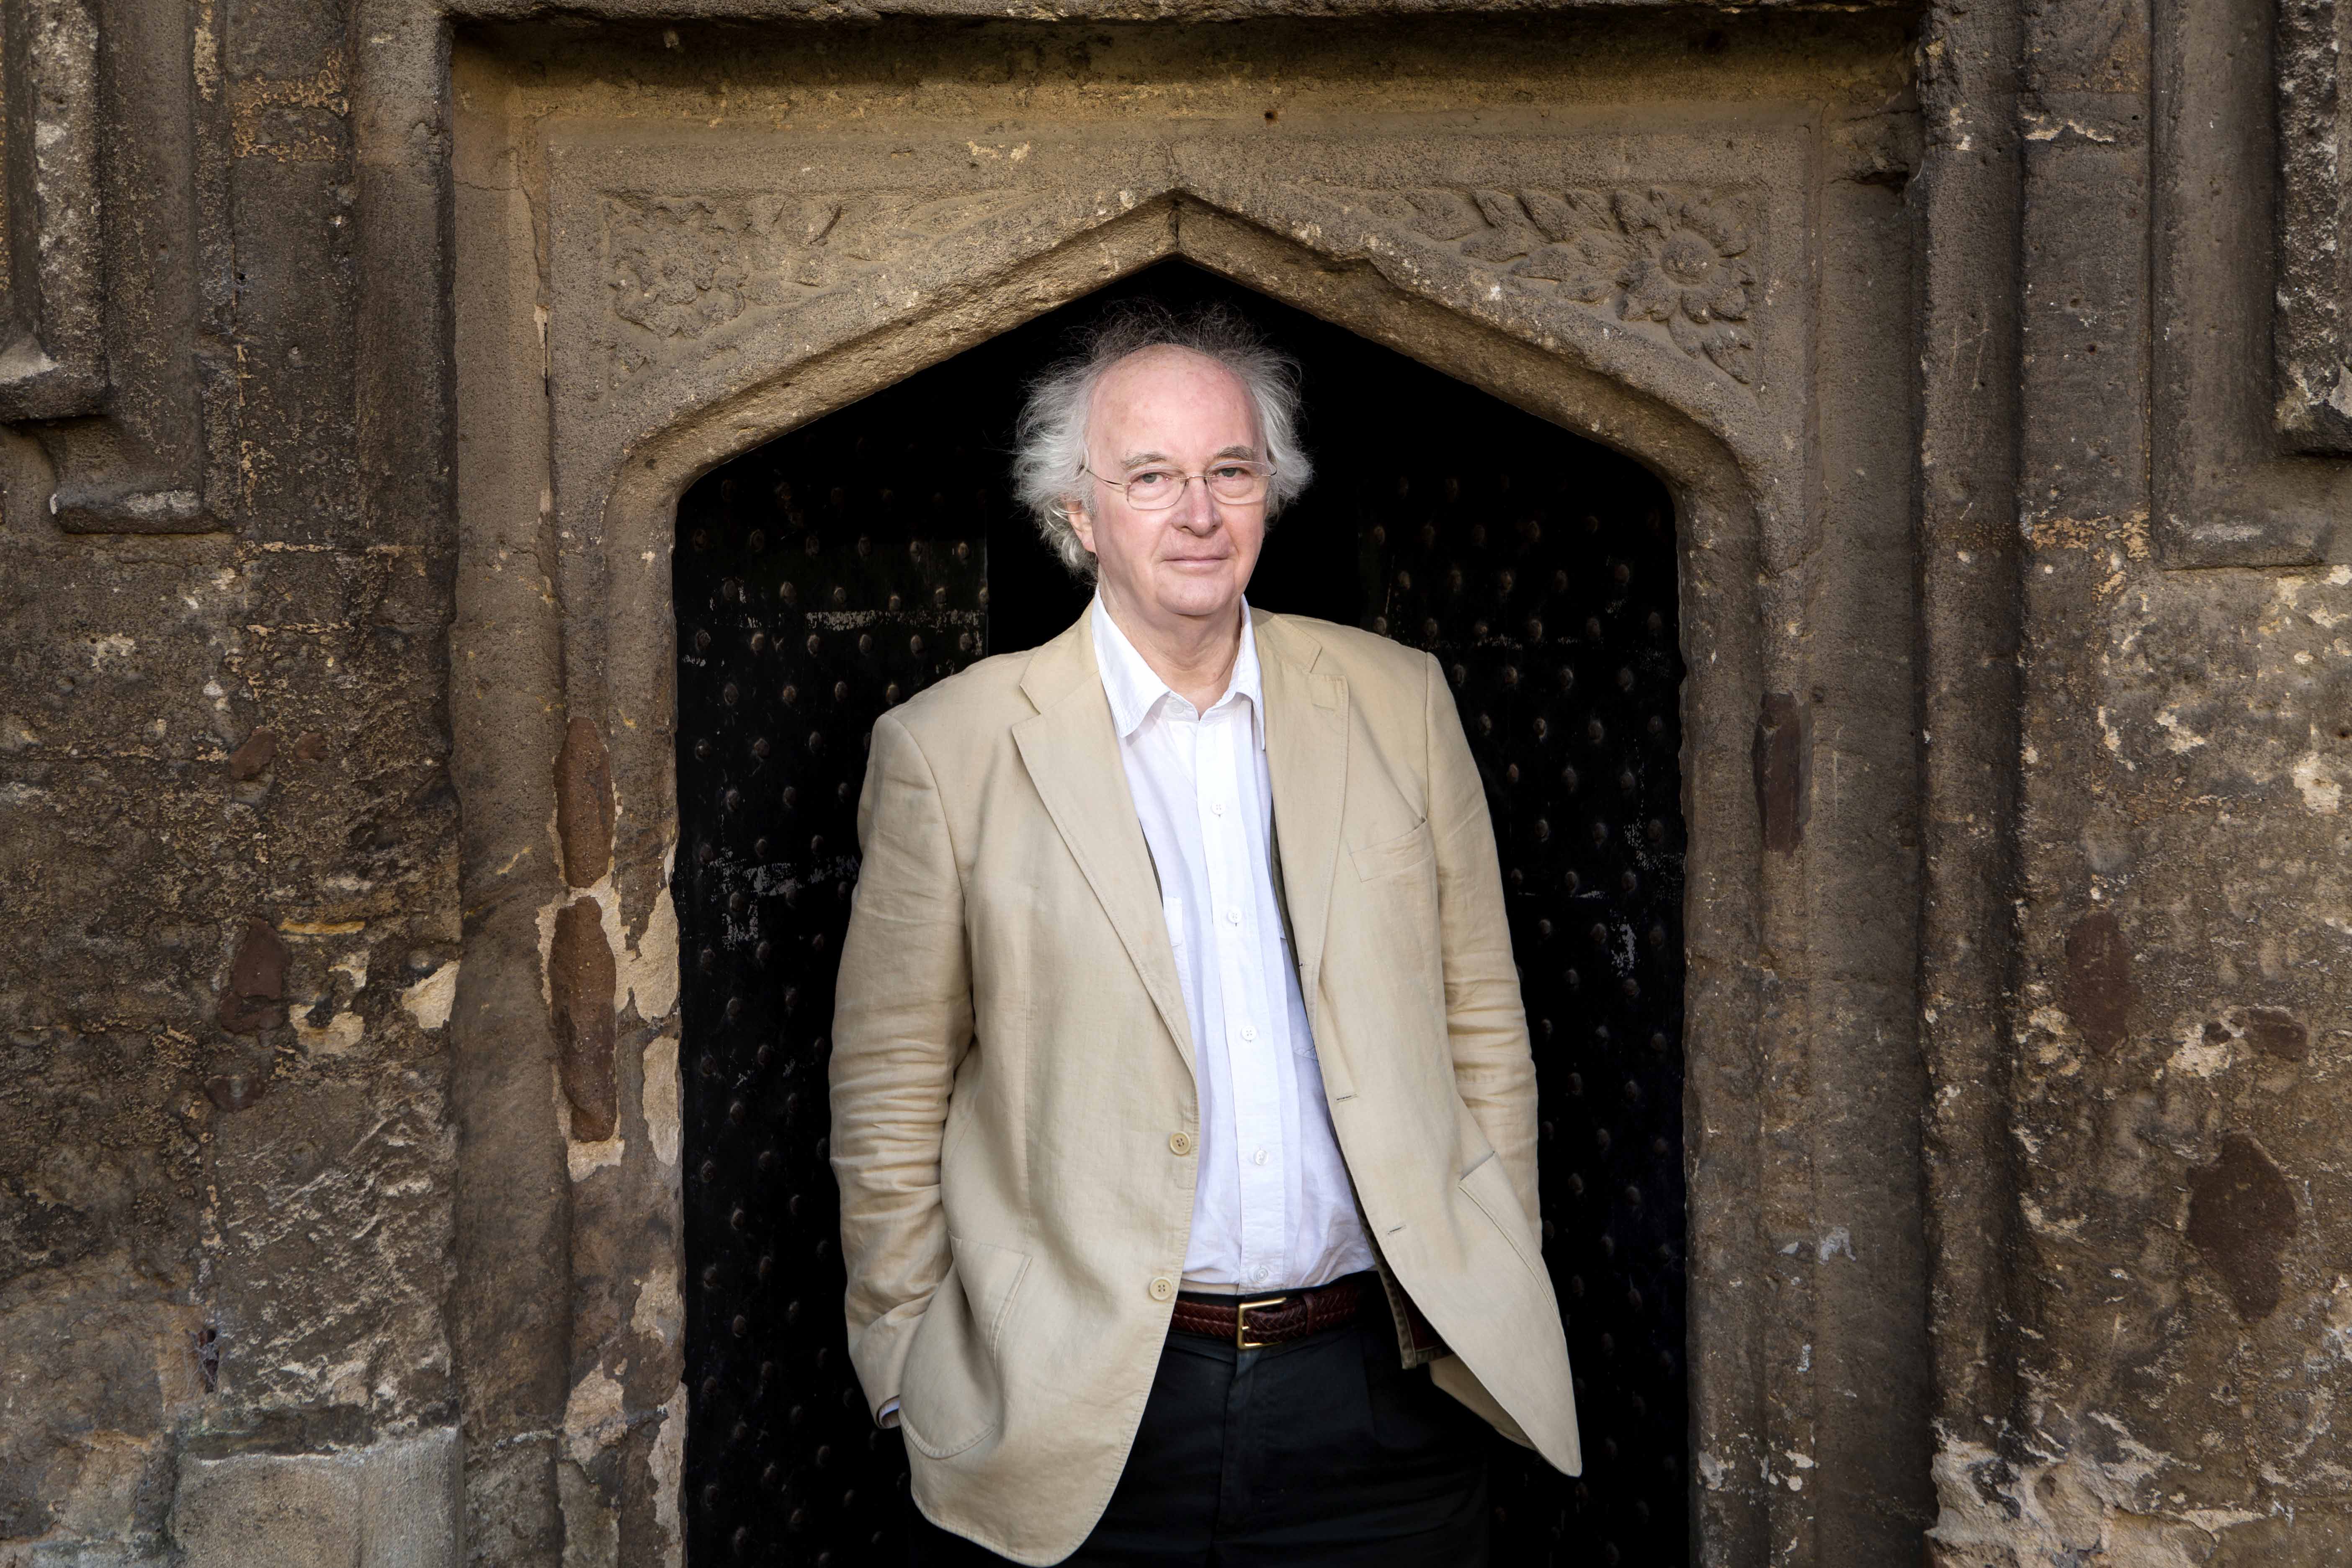 Author Philip Pullman at Oxford University. Photo: Michael Leckie